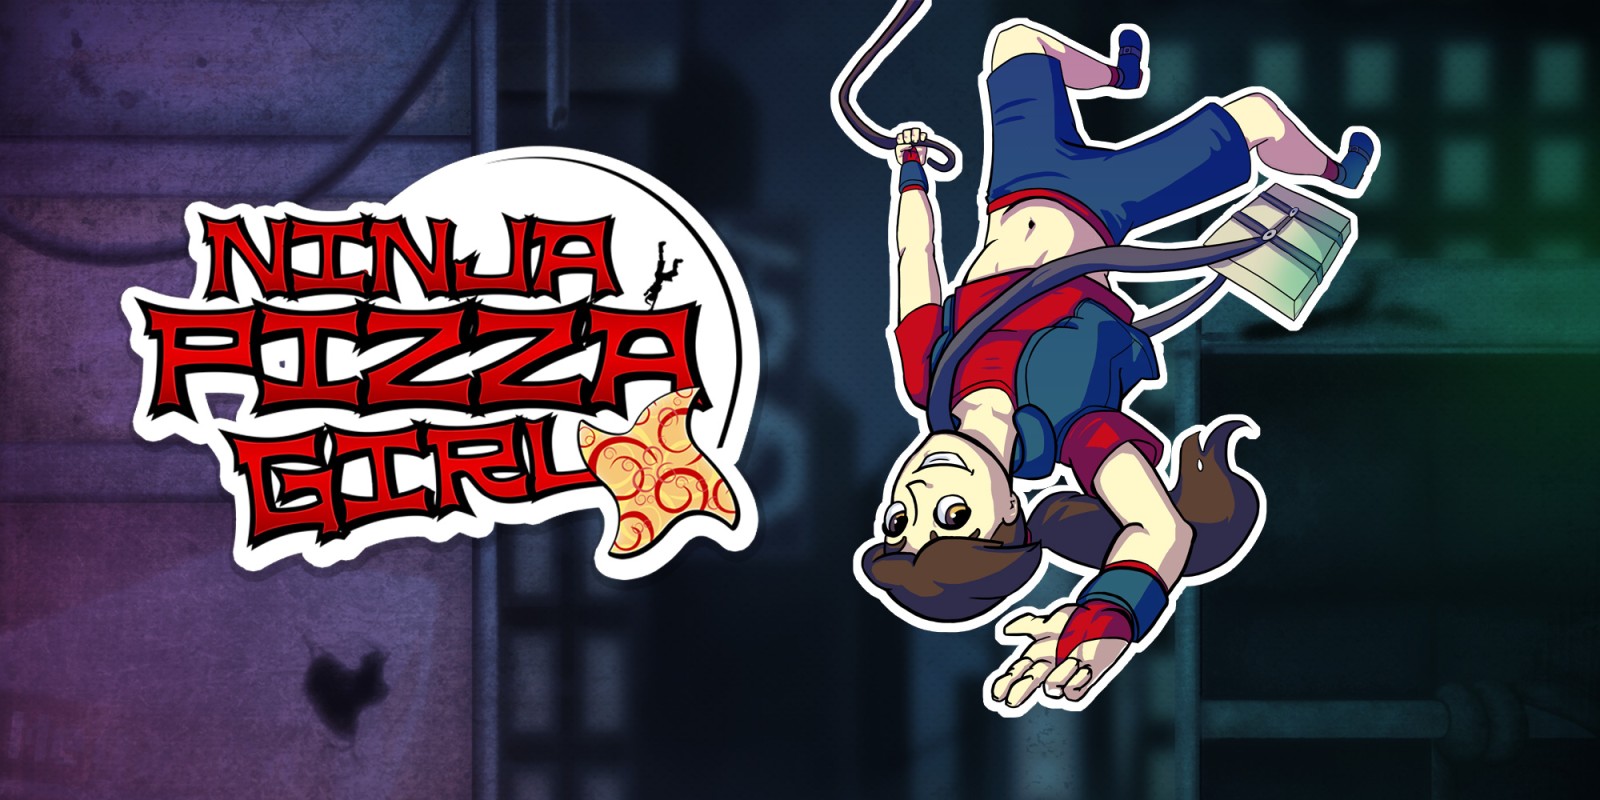 Ninja pizza girl 1 01